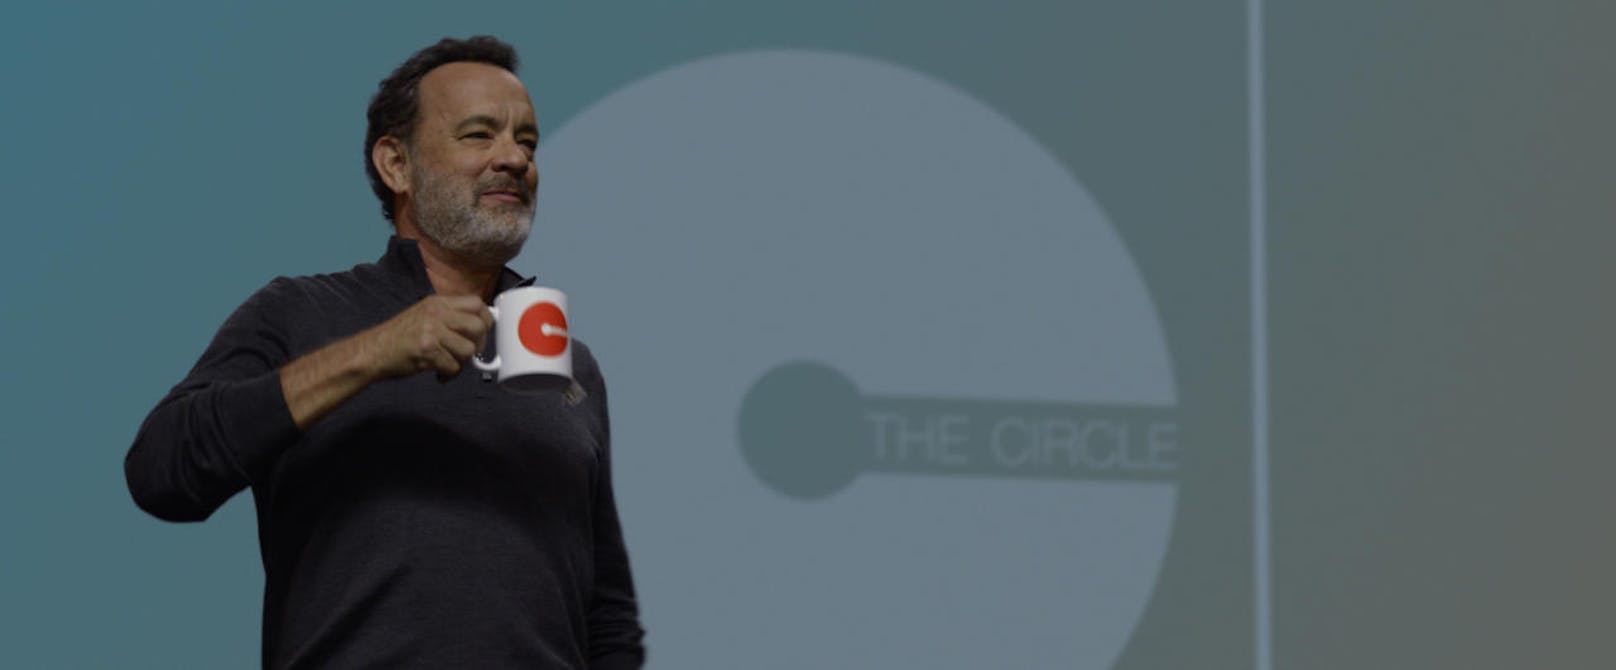 Tom Hanks in "The Circle"